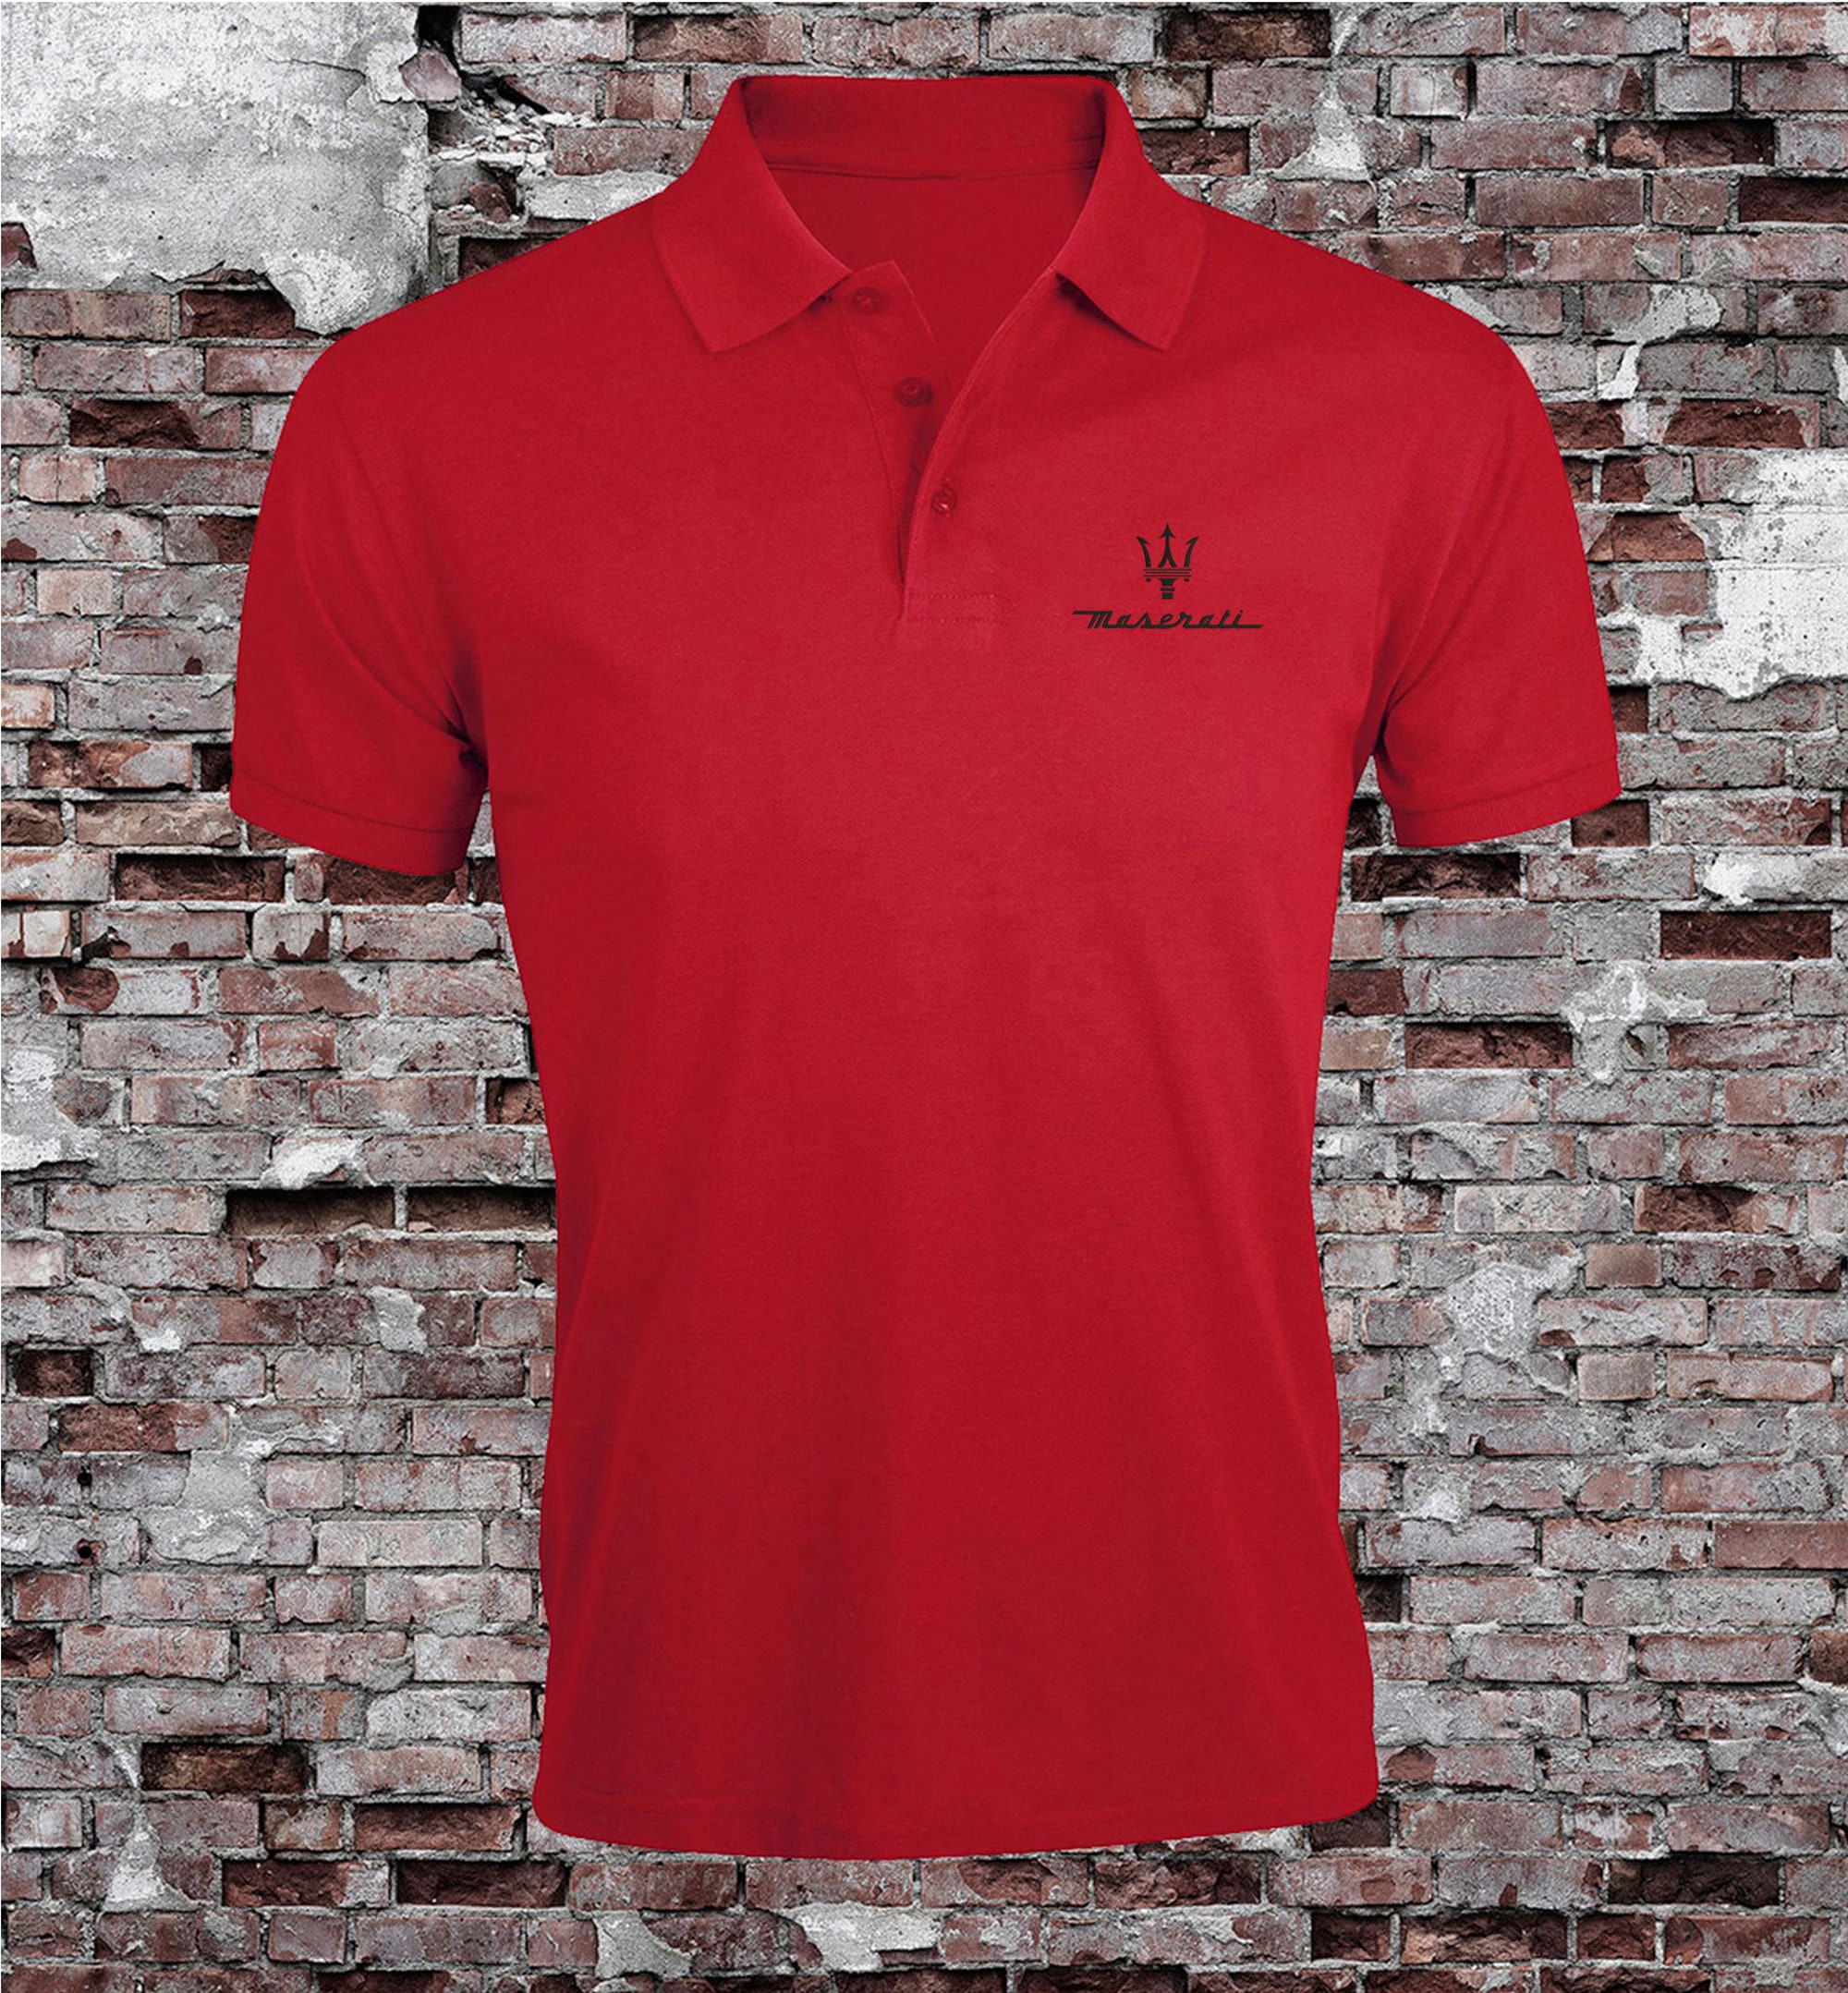 Maserati Logo Car Man's Embroidered Polo Shirt Short Sleeve Summer Wear Clothing Top T-Shirt